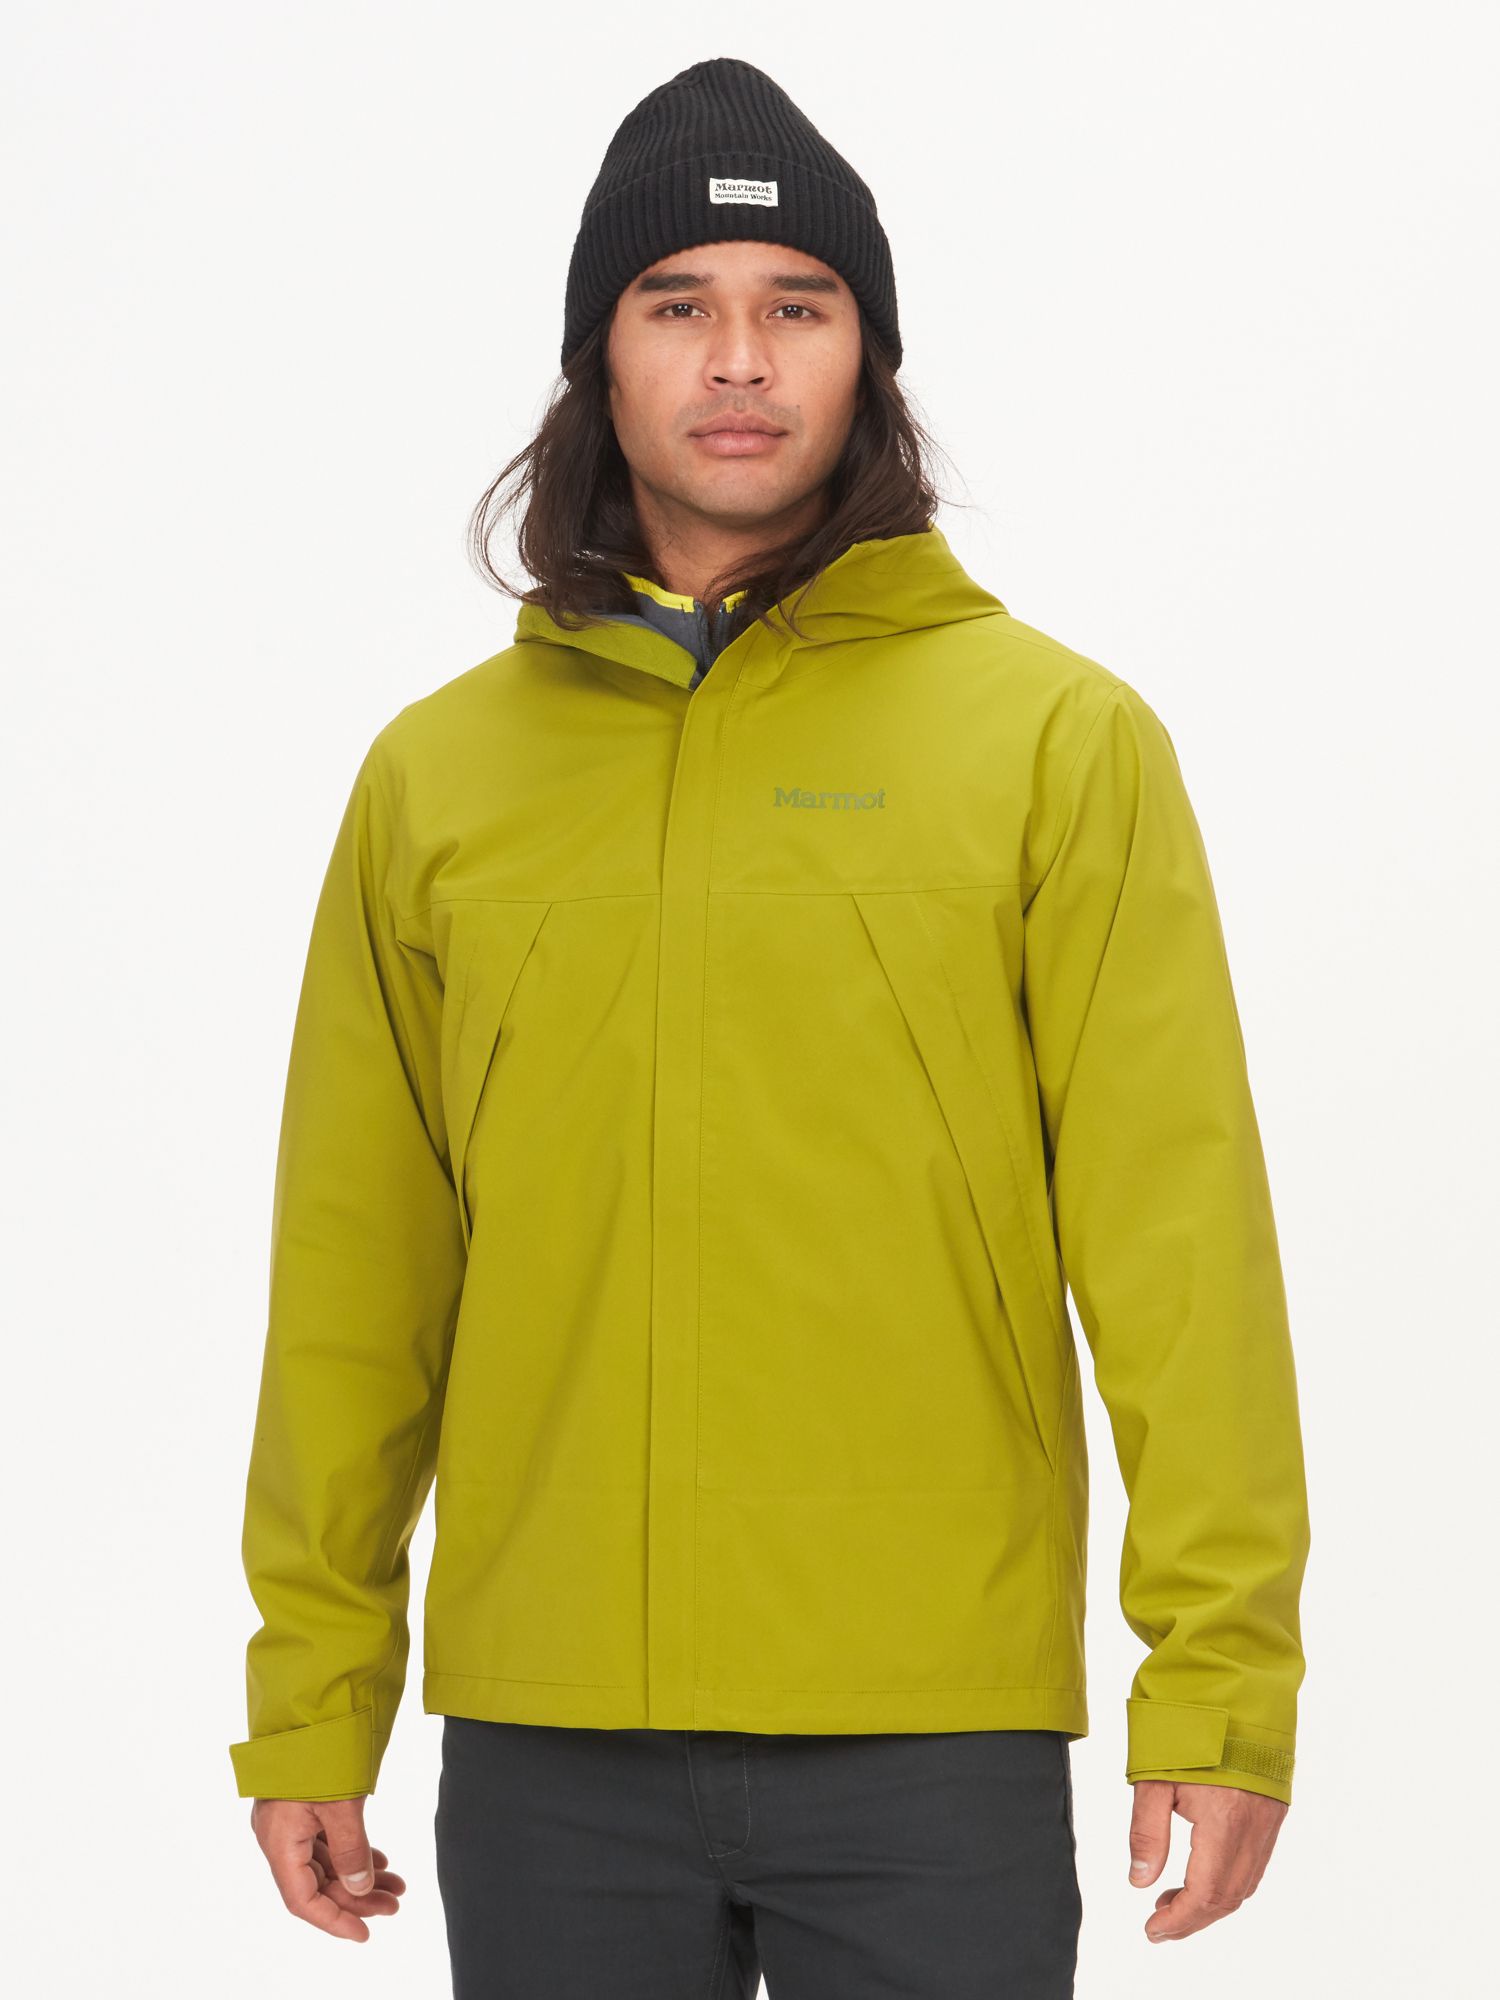 Men's PreCip® Eco Pro Jacket | Marmot